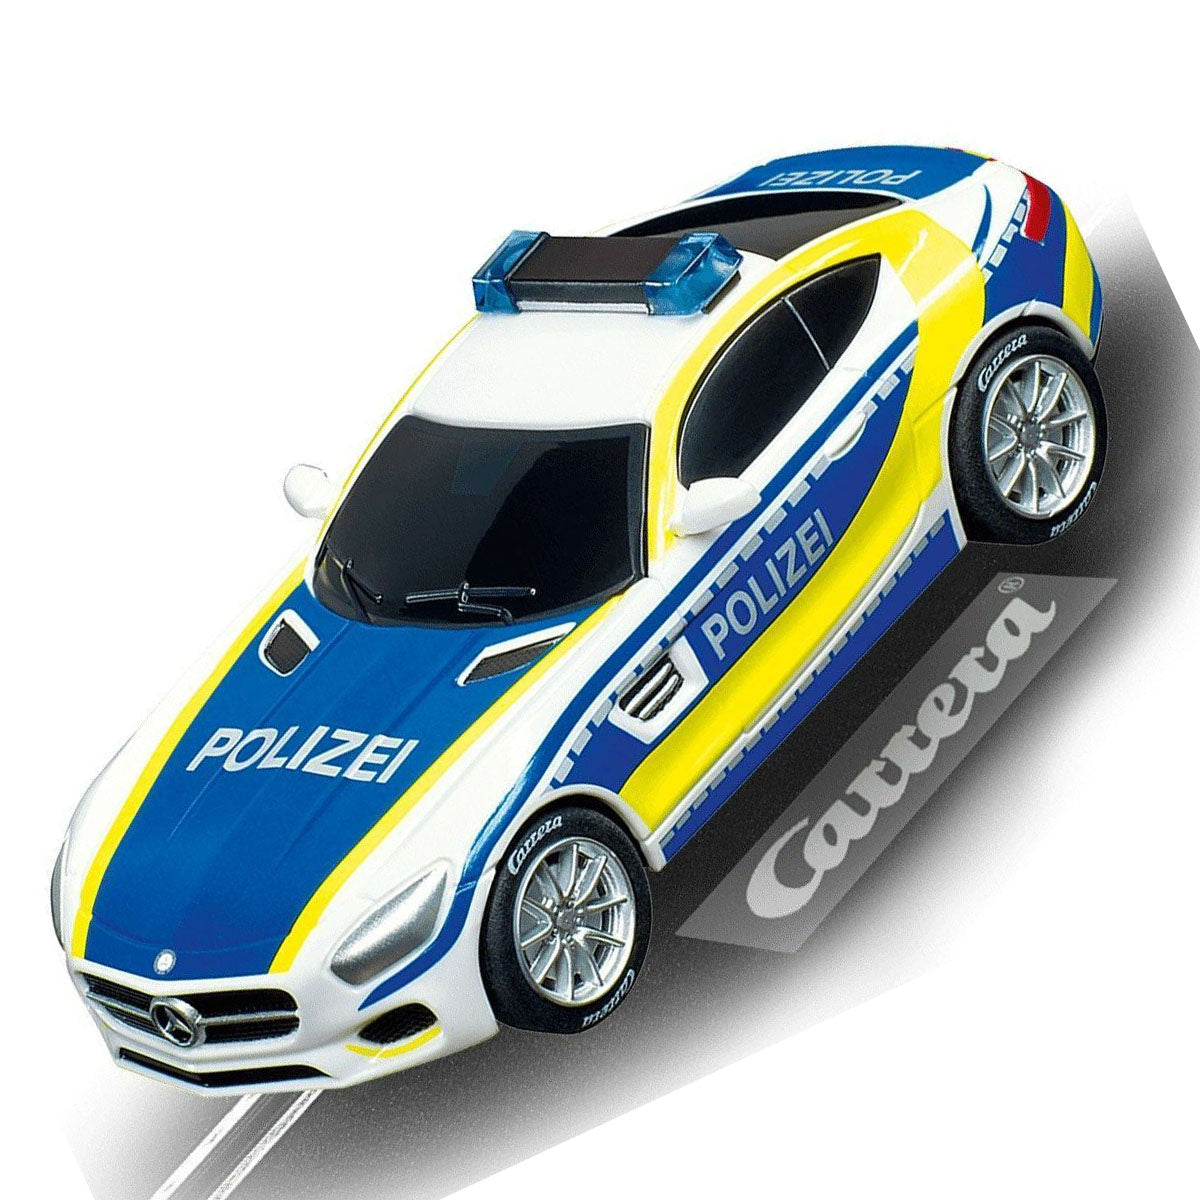 Carrera 64118 GO!!! Mercedes-AMG GT Coupe Polizei Police 1/43 Scale Slot Car - PowerHobby